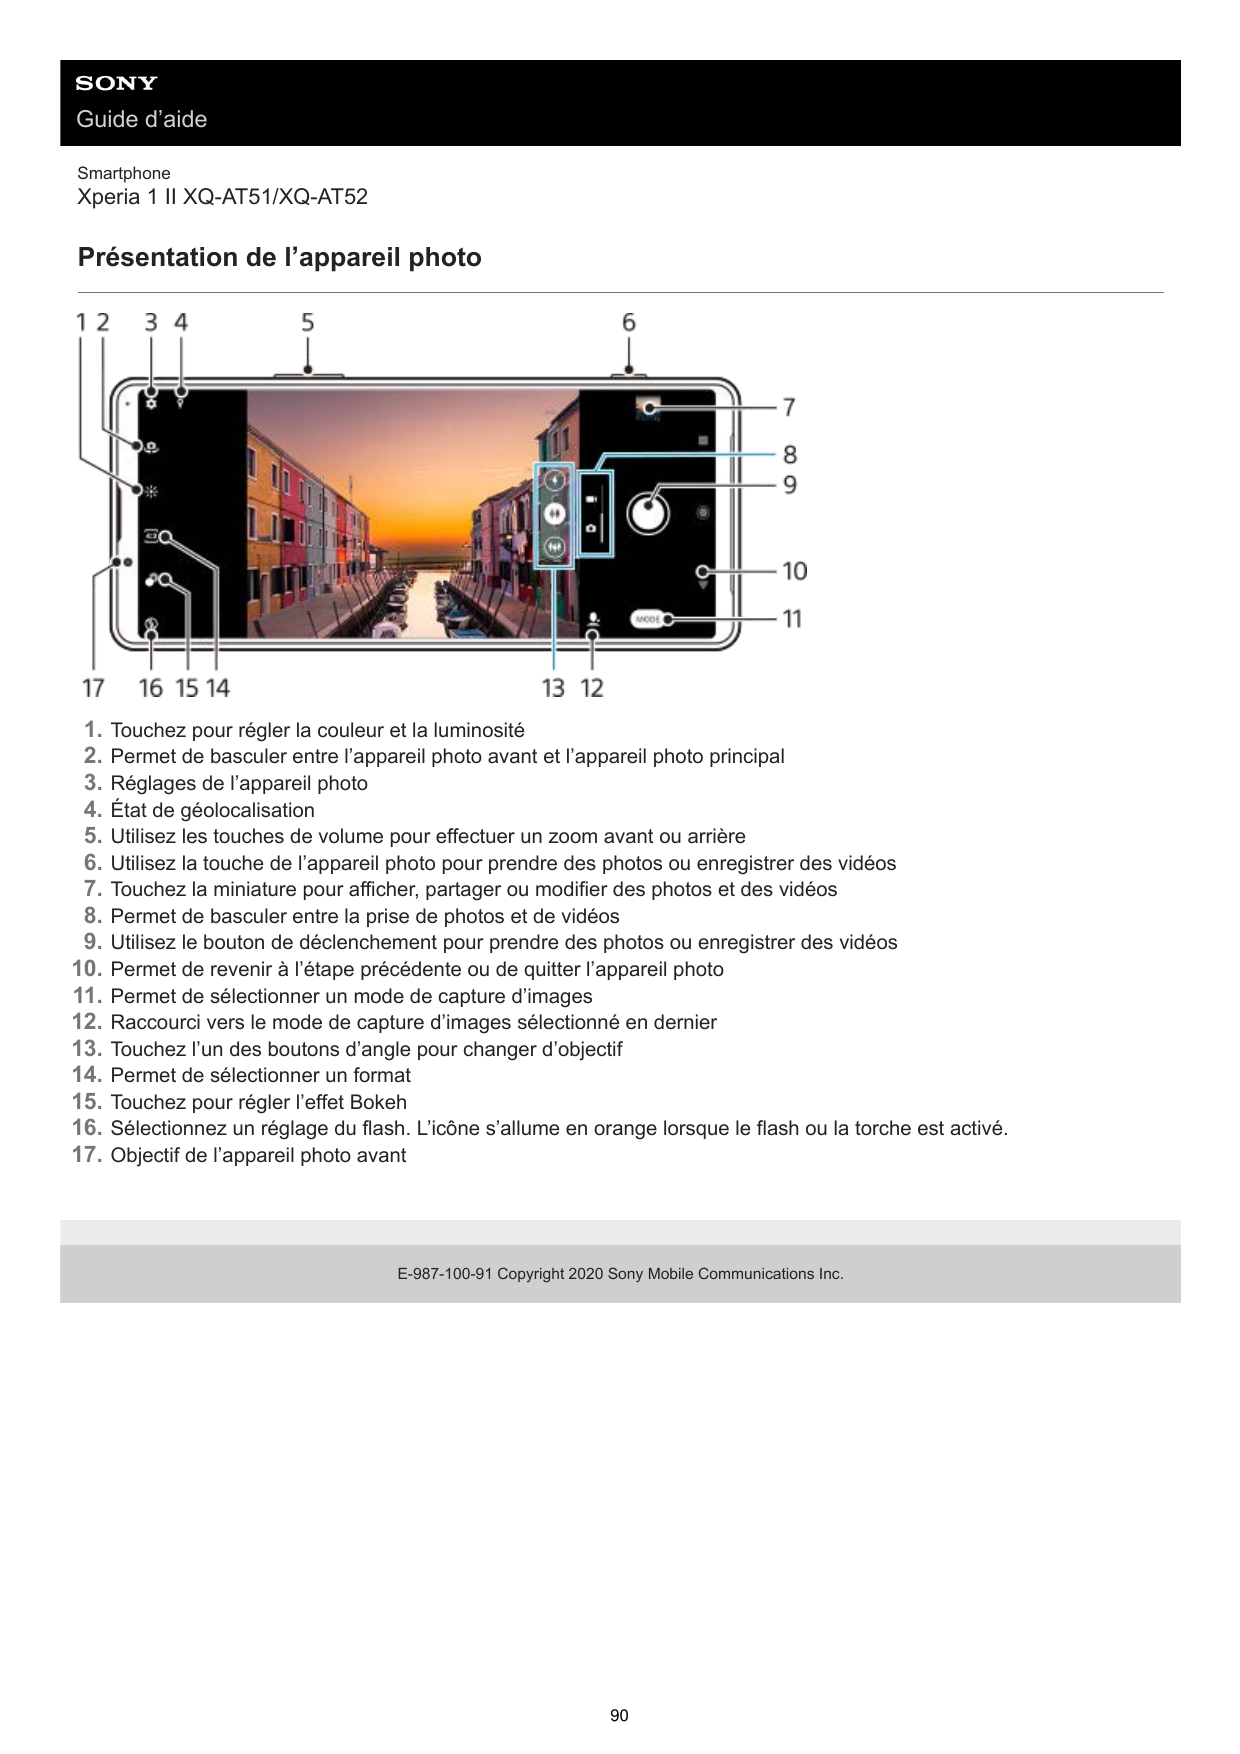 Guide d’aideSmartphoneXperia 1 II XQ-AT51/XQ-AT52Présentation de l’appareil photo1.2.3.4.5.6.7.8.9.10.11.12.13.14.15.16.17.Touch